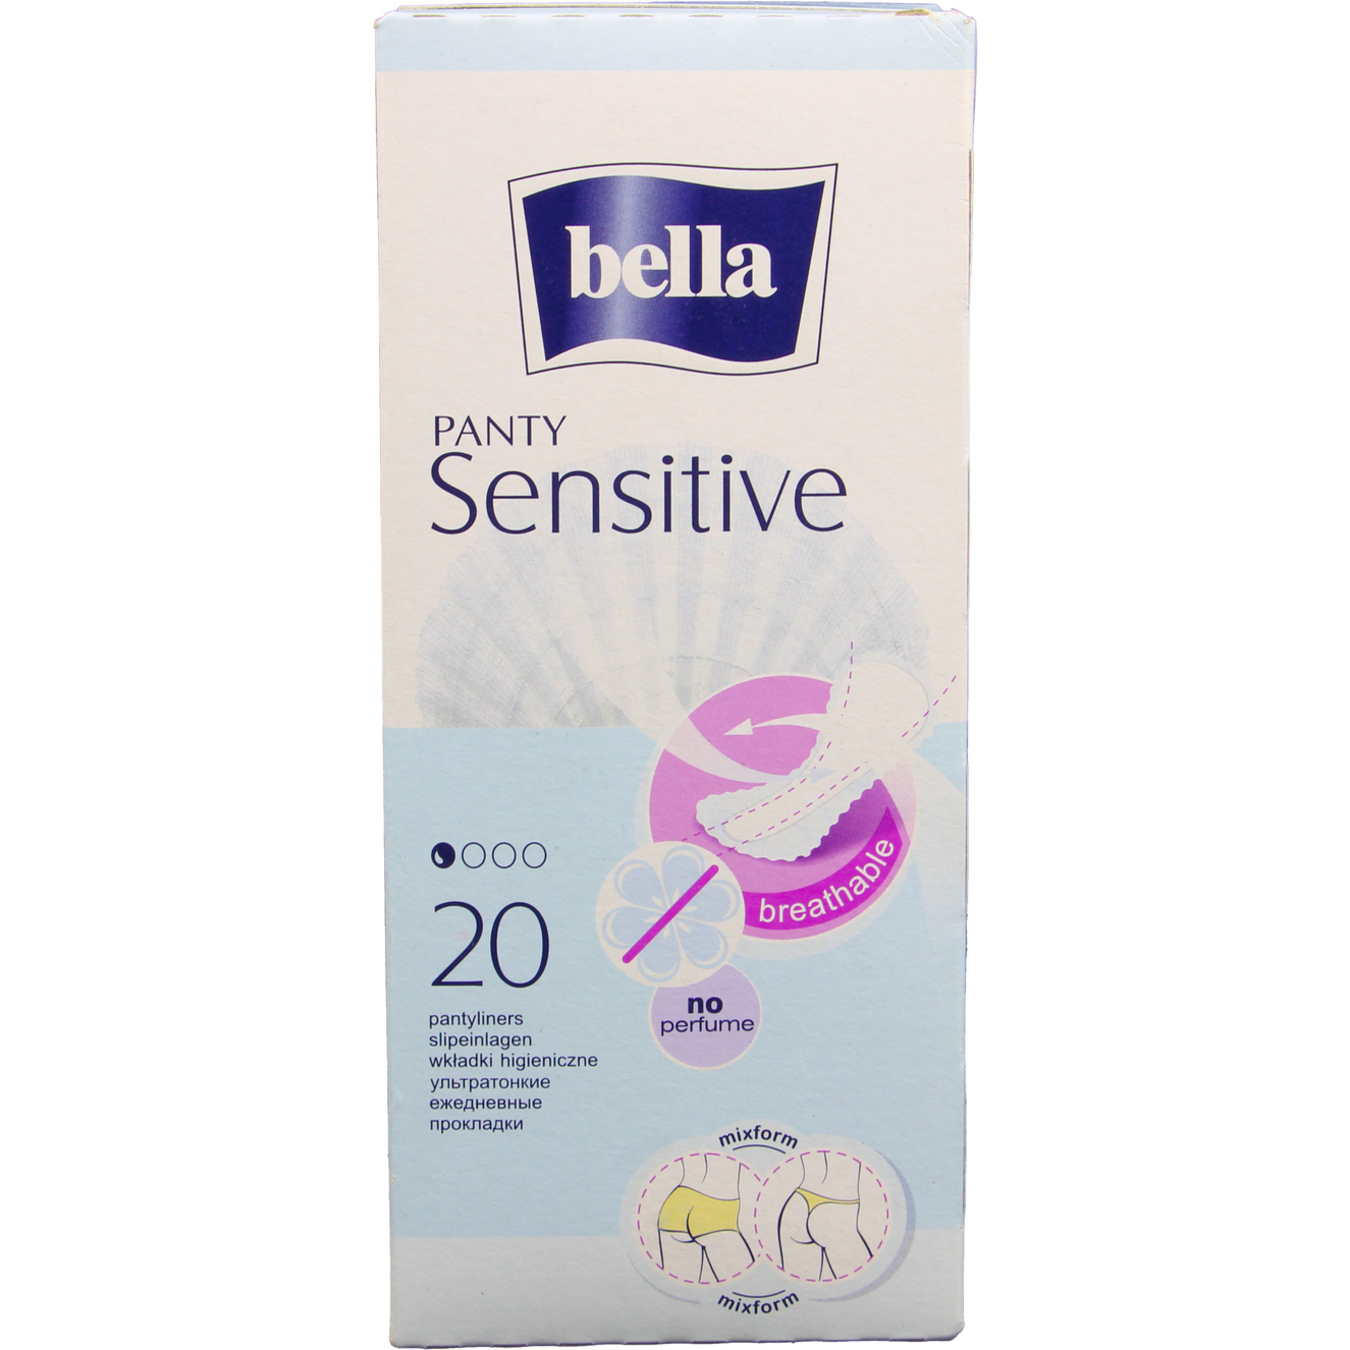 Bella Panty Sensitive For Women Pads